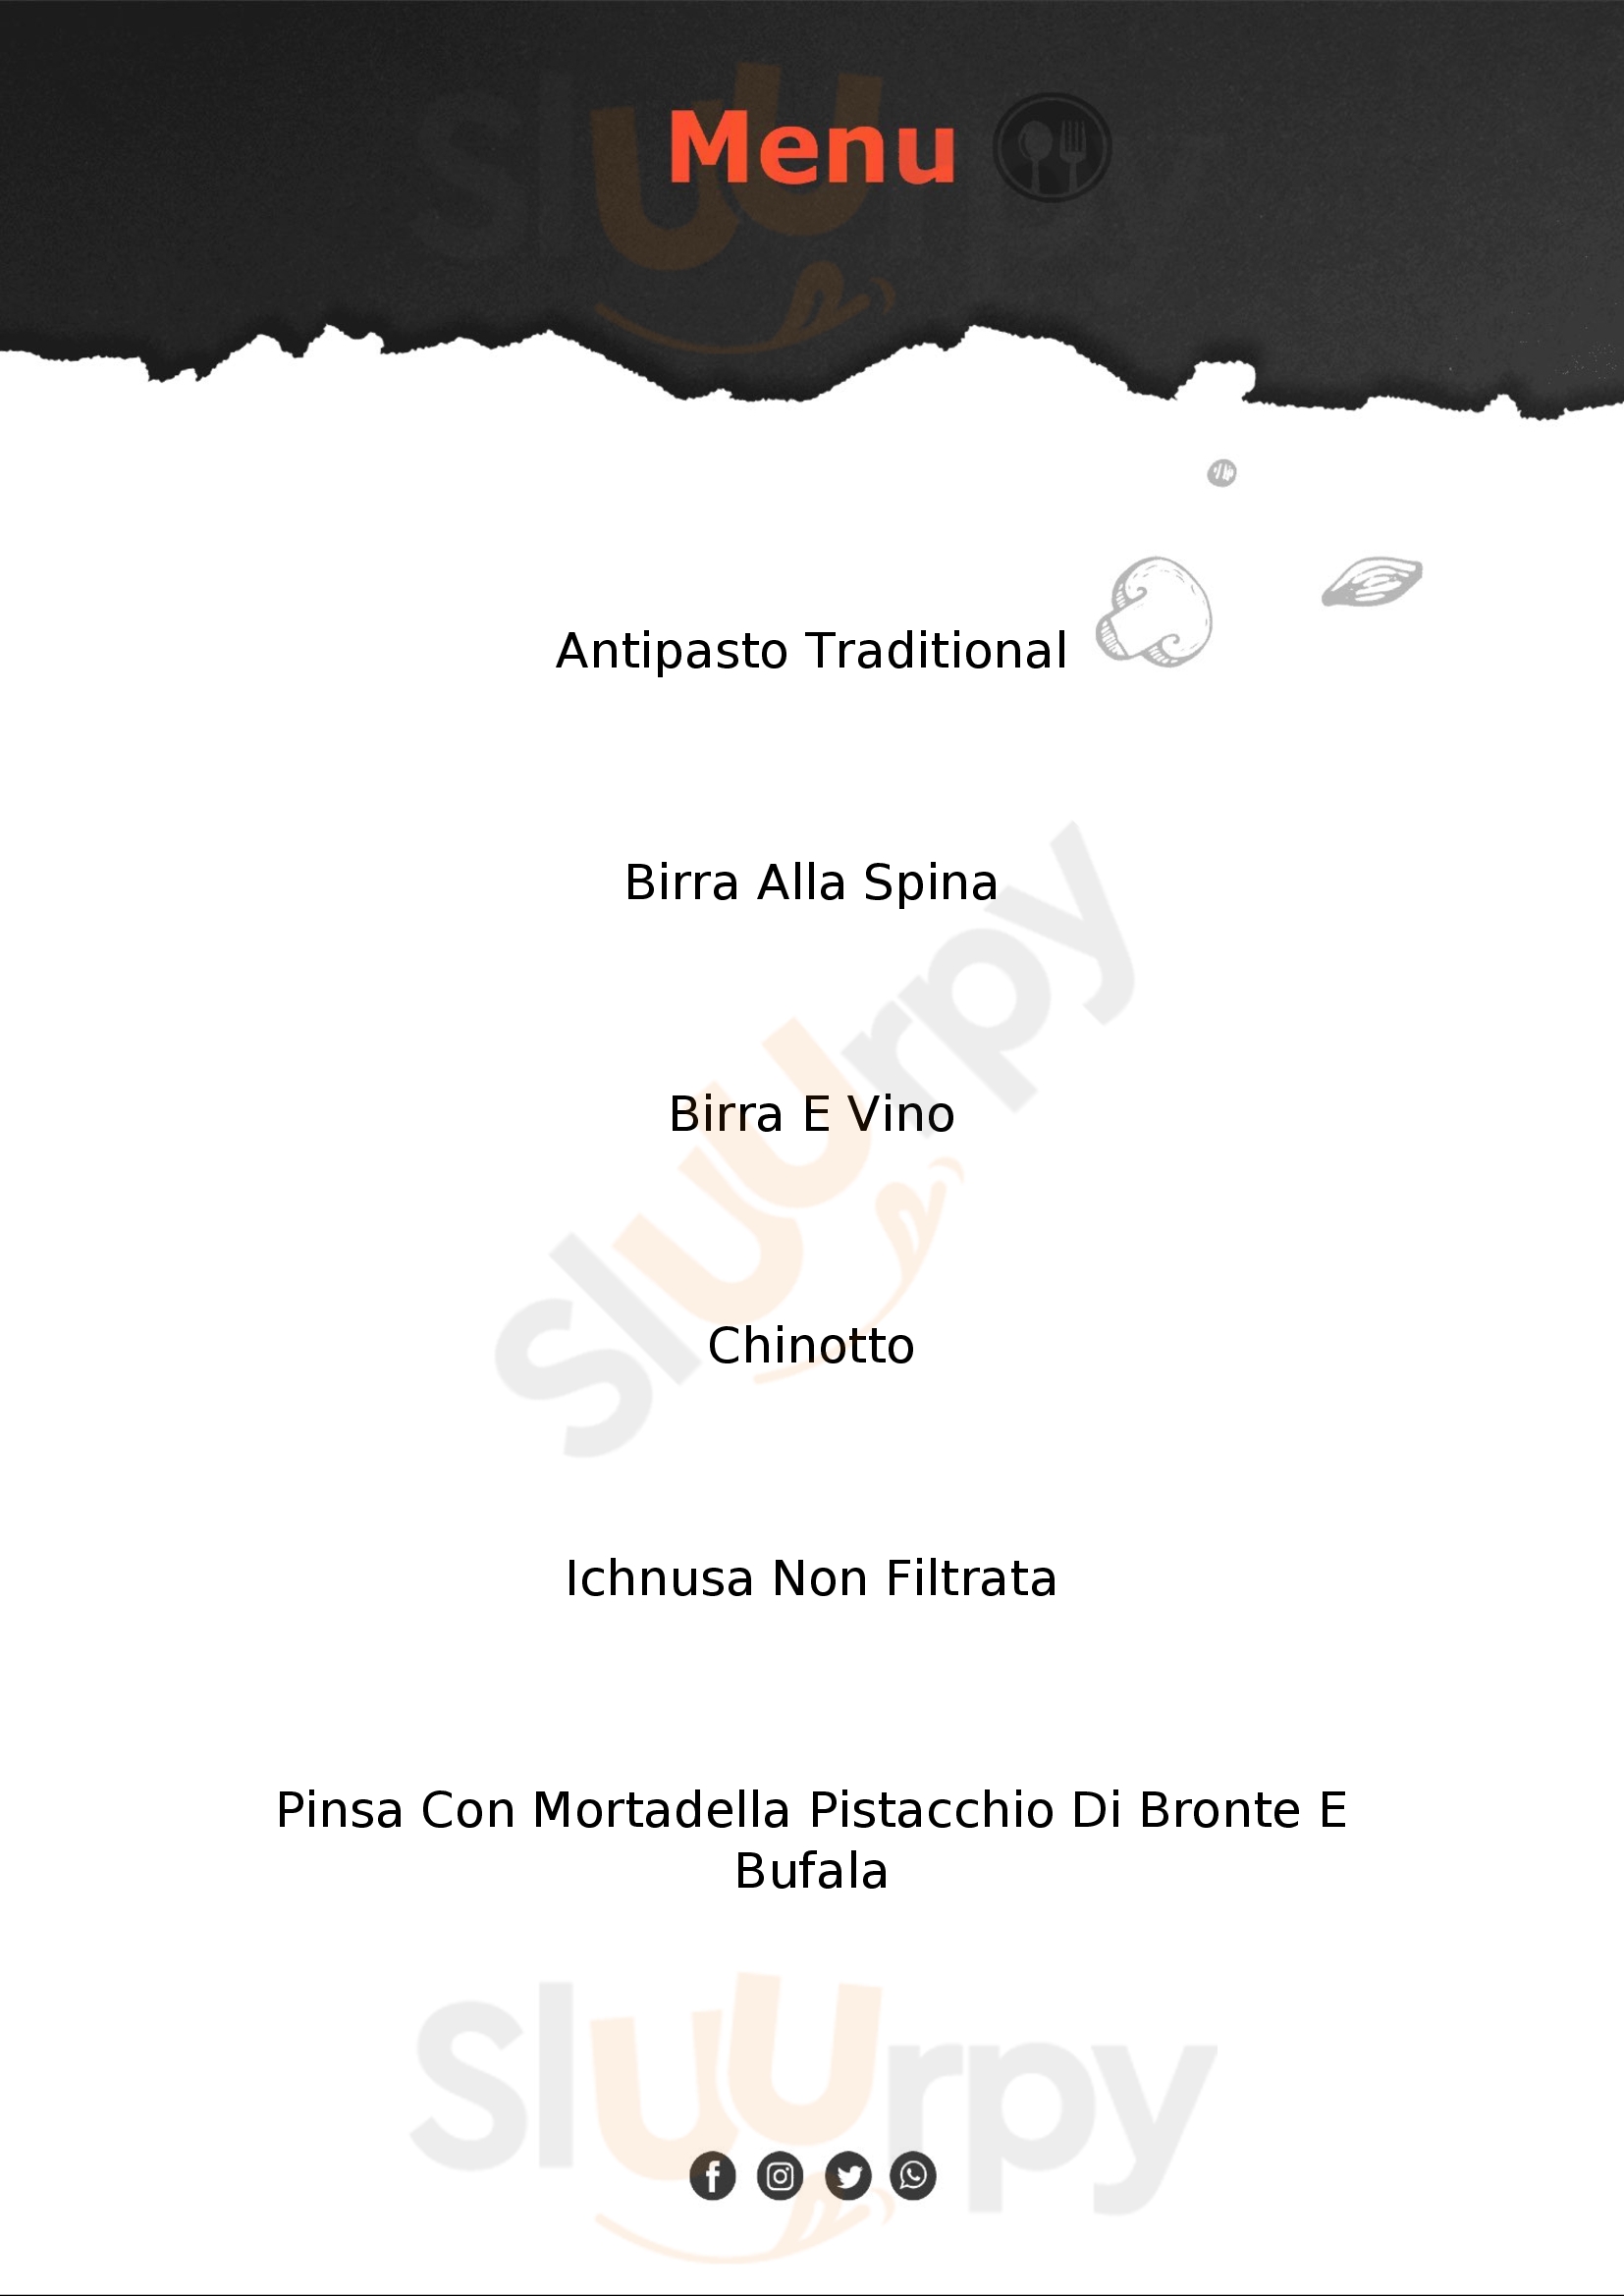 A Caverna Pinseria Gioiosa Ionica menù 1 pagina